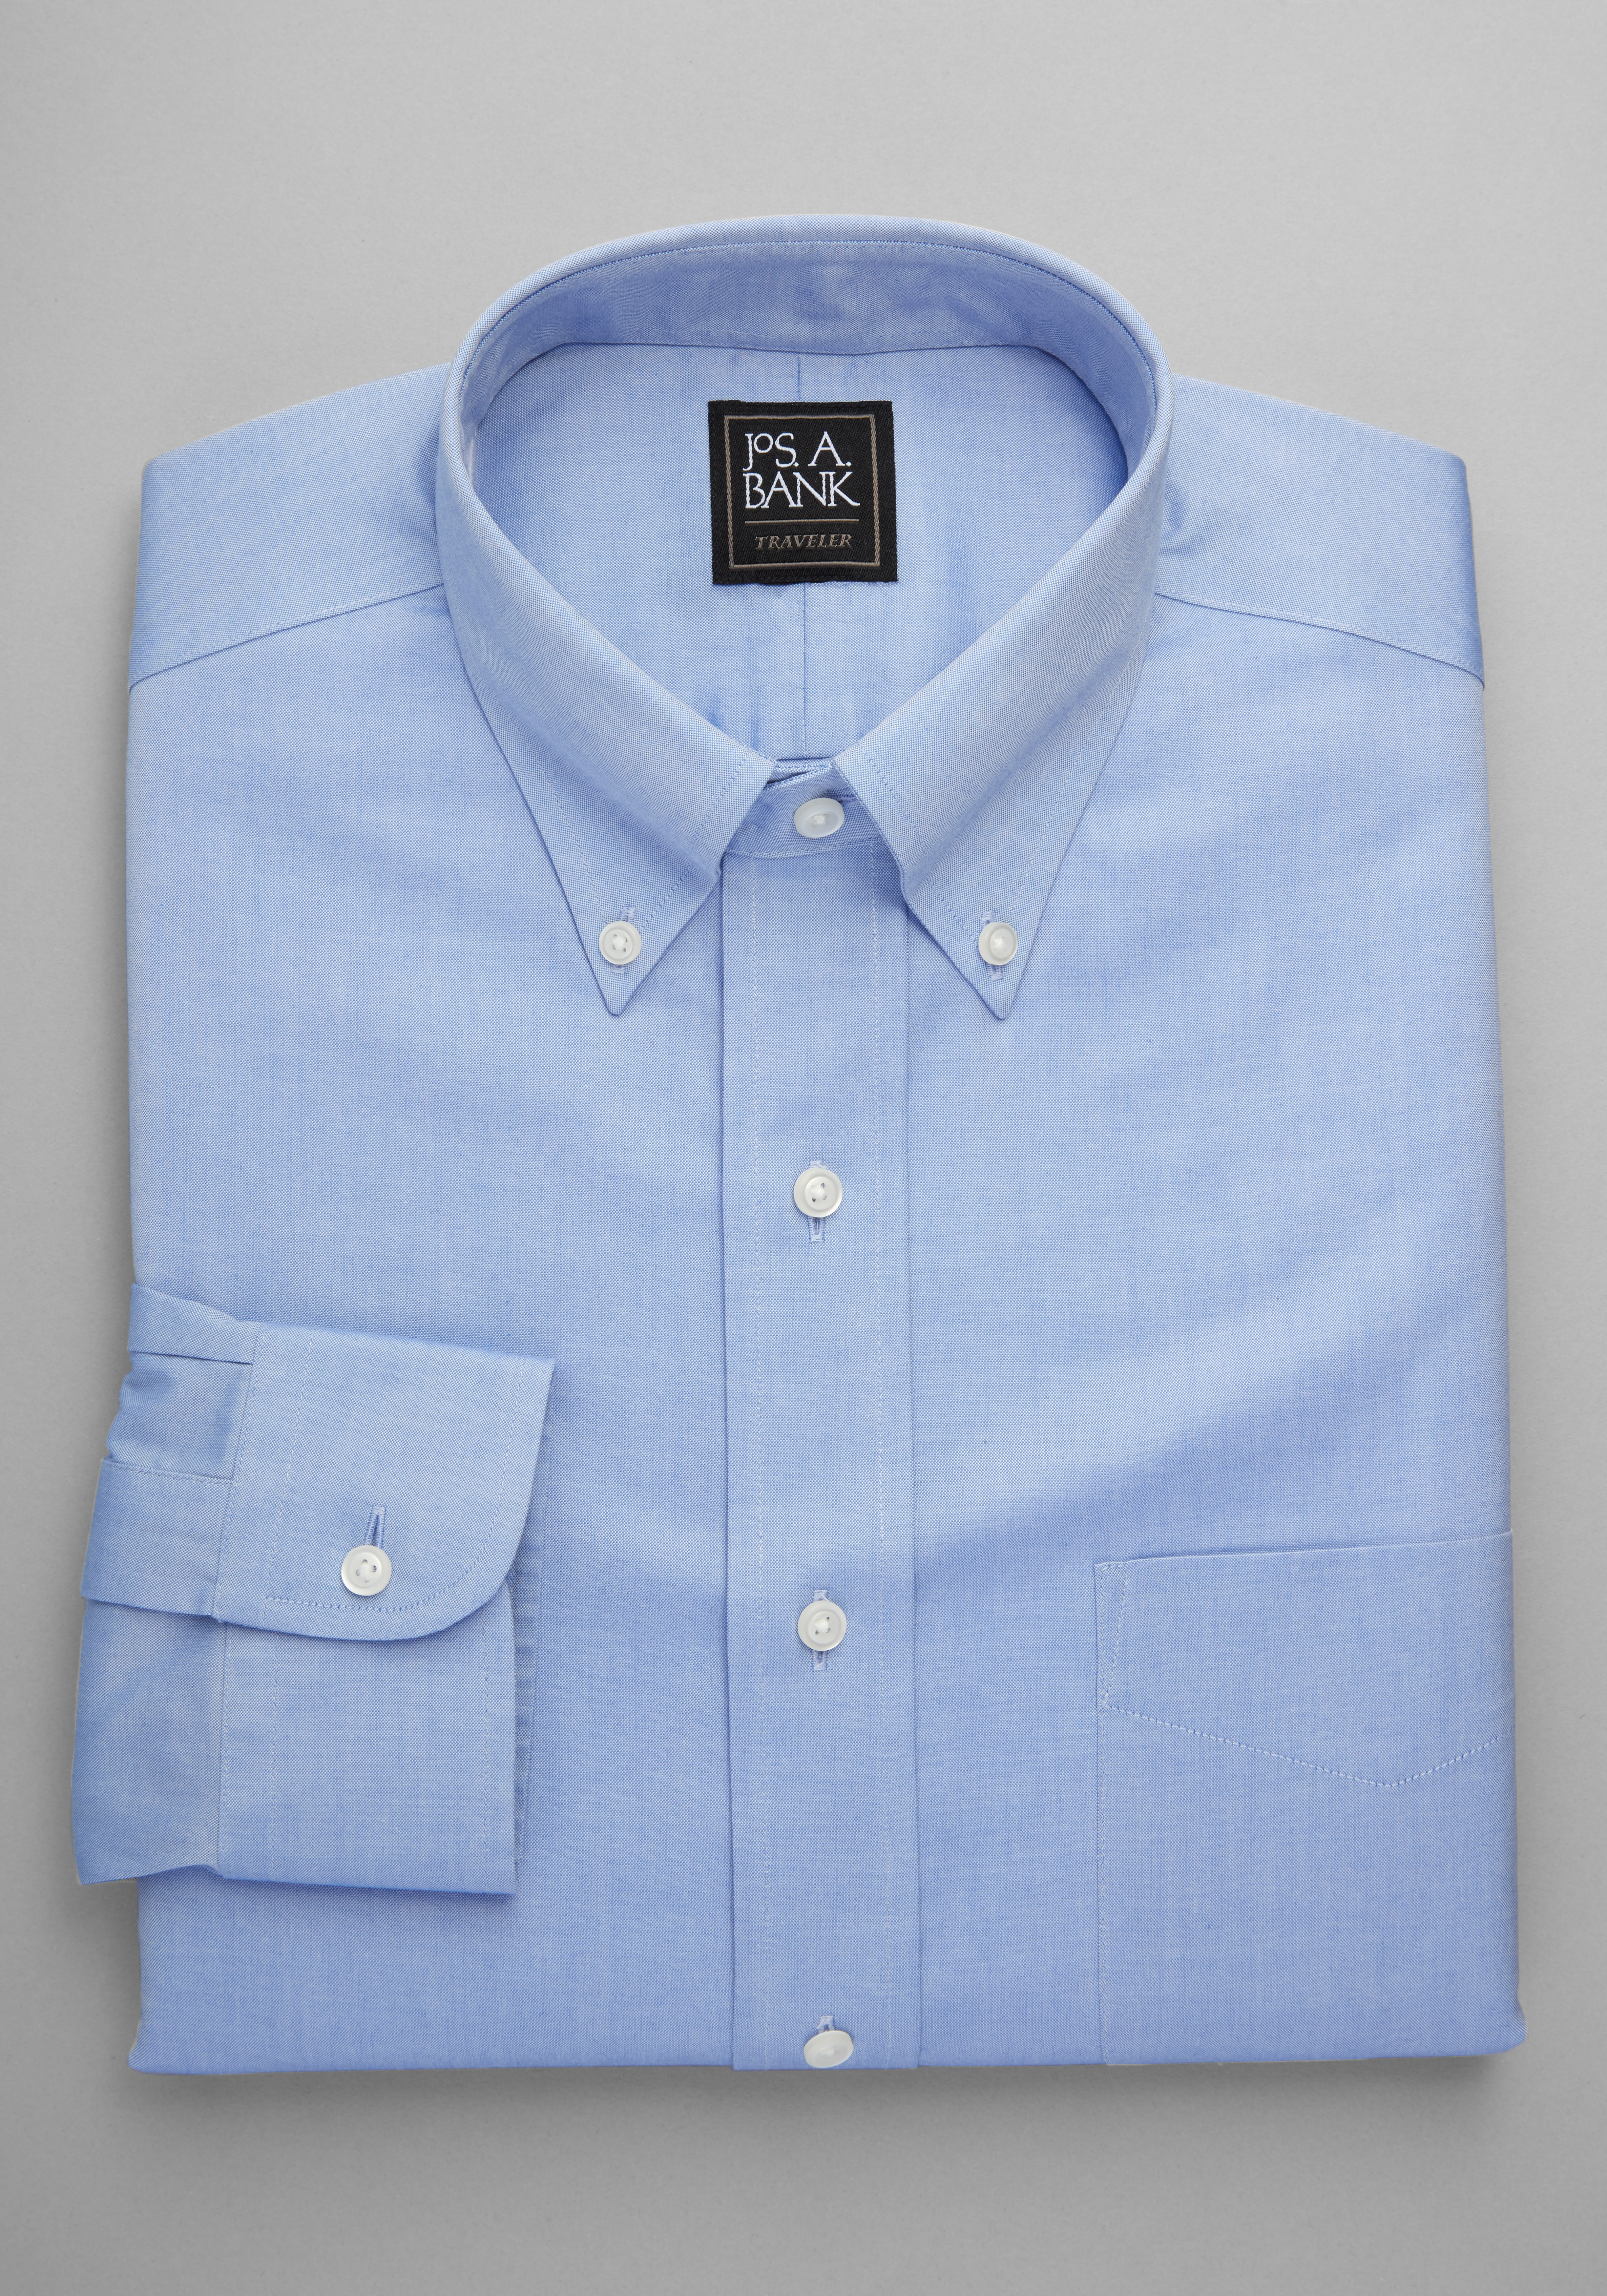 Men's Sale, Traveler Collection Tailored Fit Button-Down Collar Dress Shirt - Jos A Bank